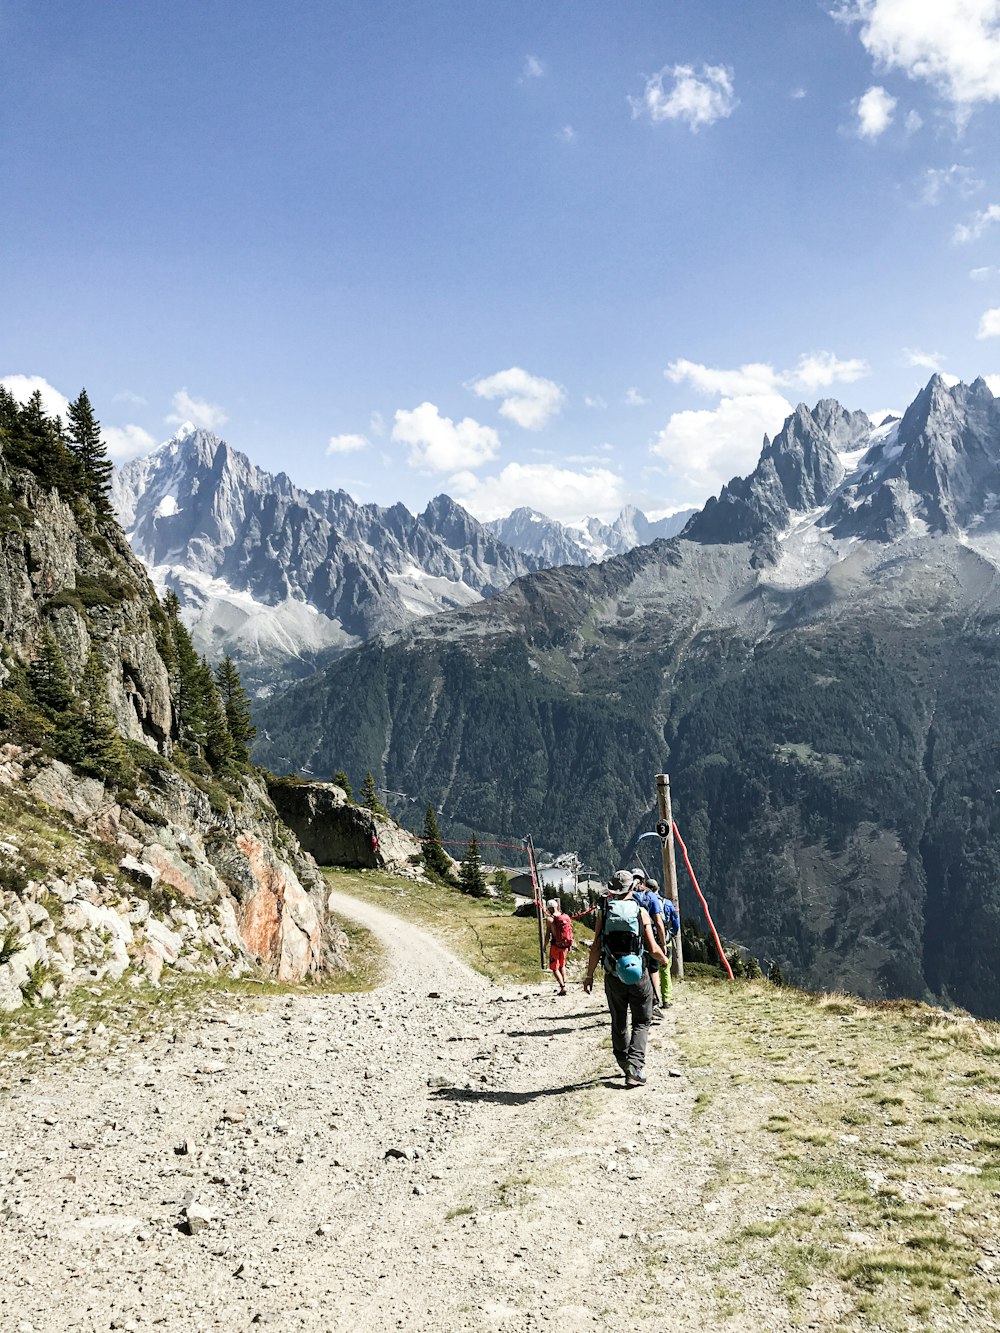 people hiking on mountain during daytime